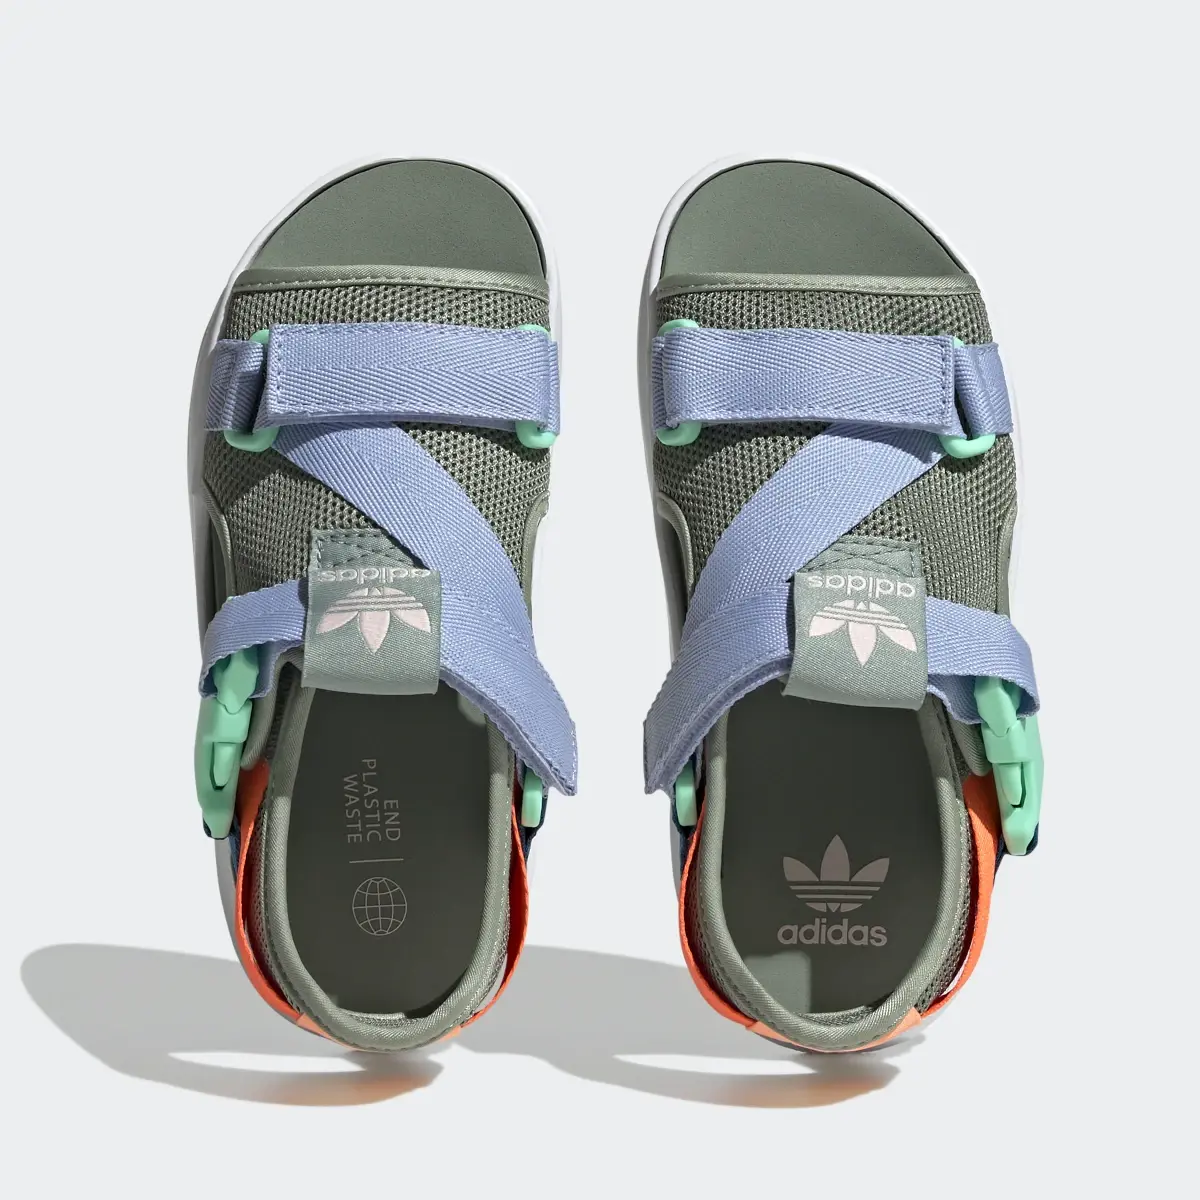 Adidas 360 3.0 Sandals. 3